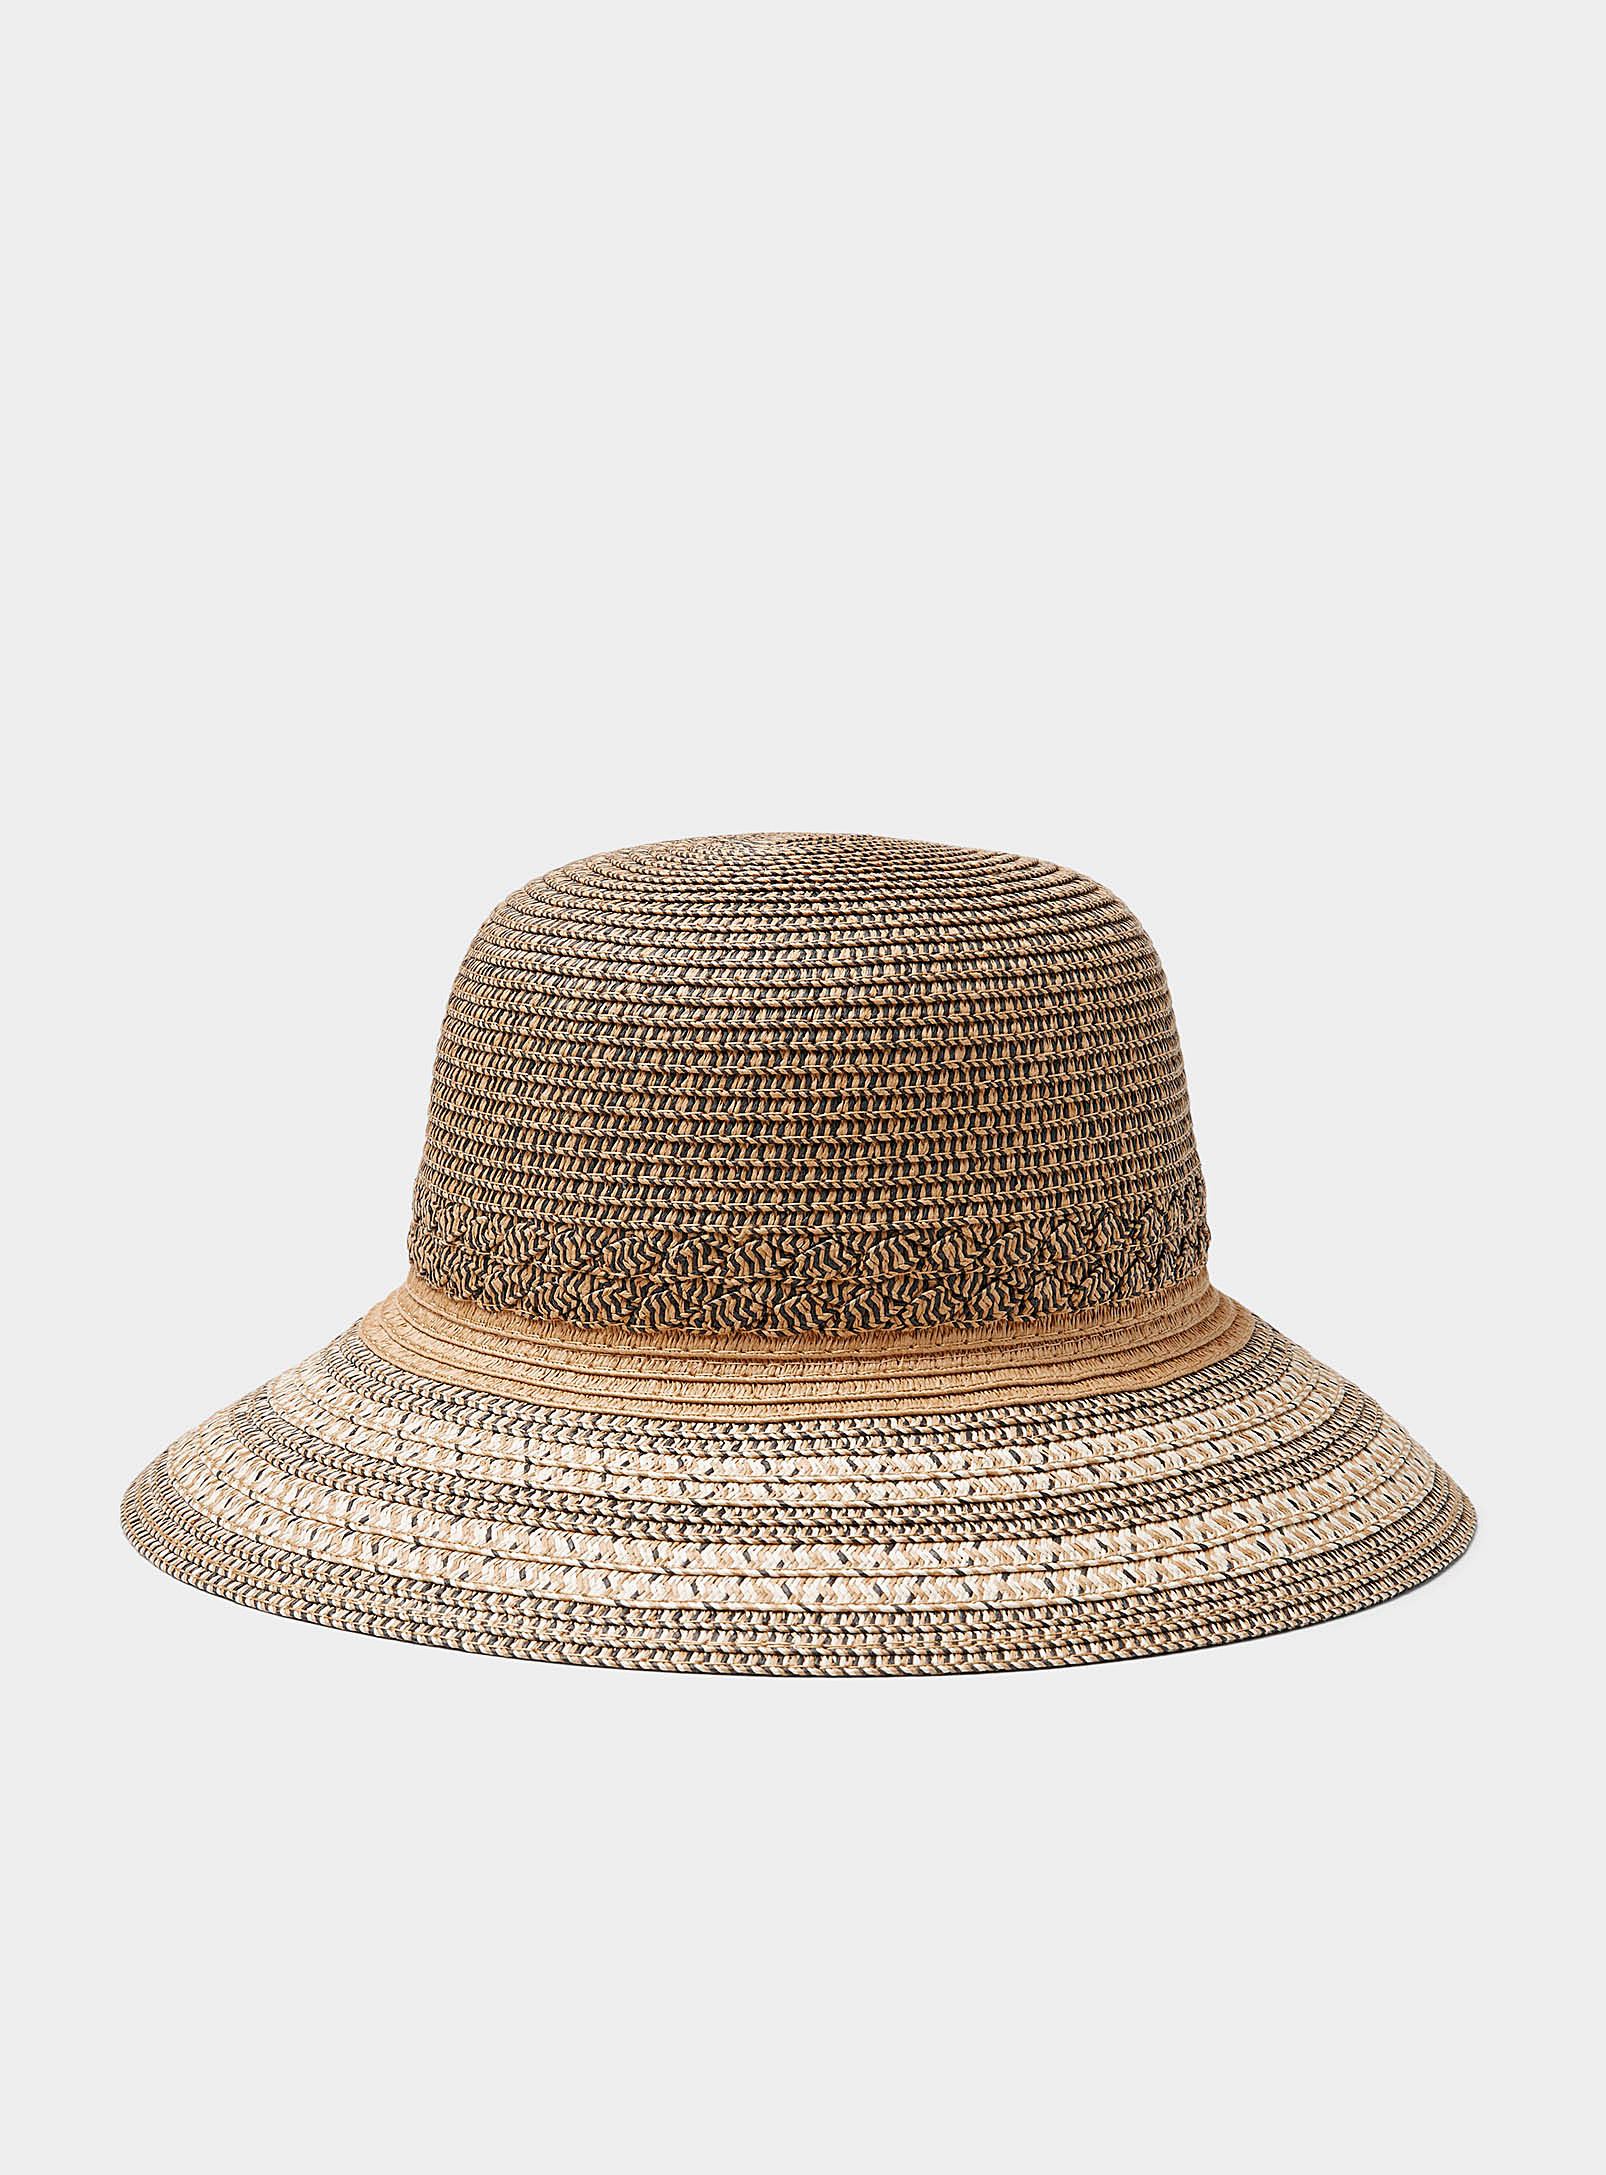 Parkhurst - Women's Covello two-tone straw Cloche Hat